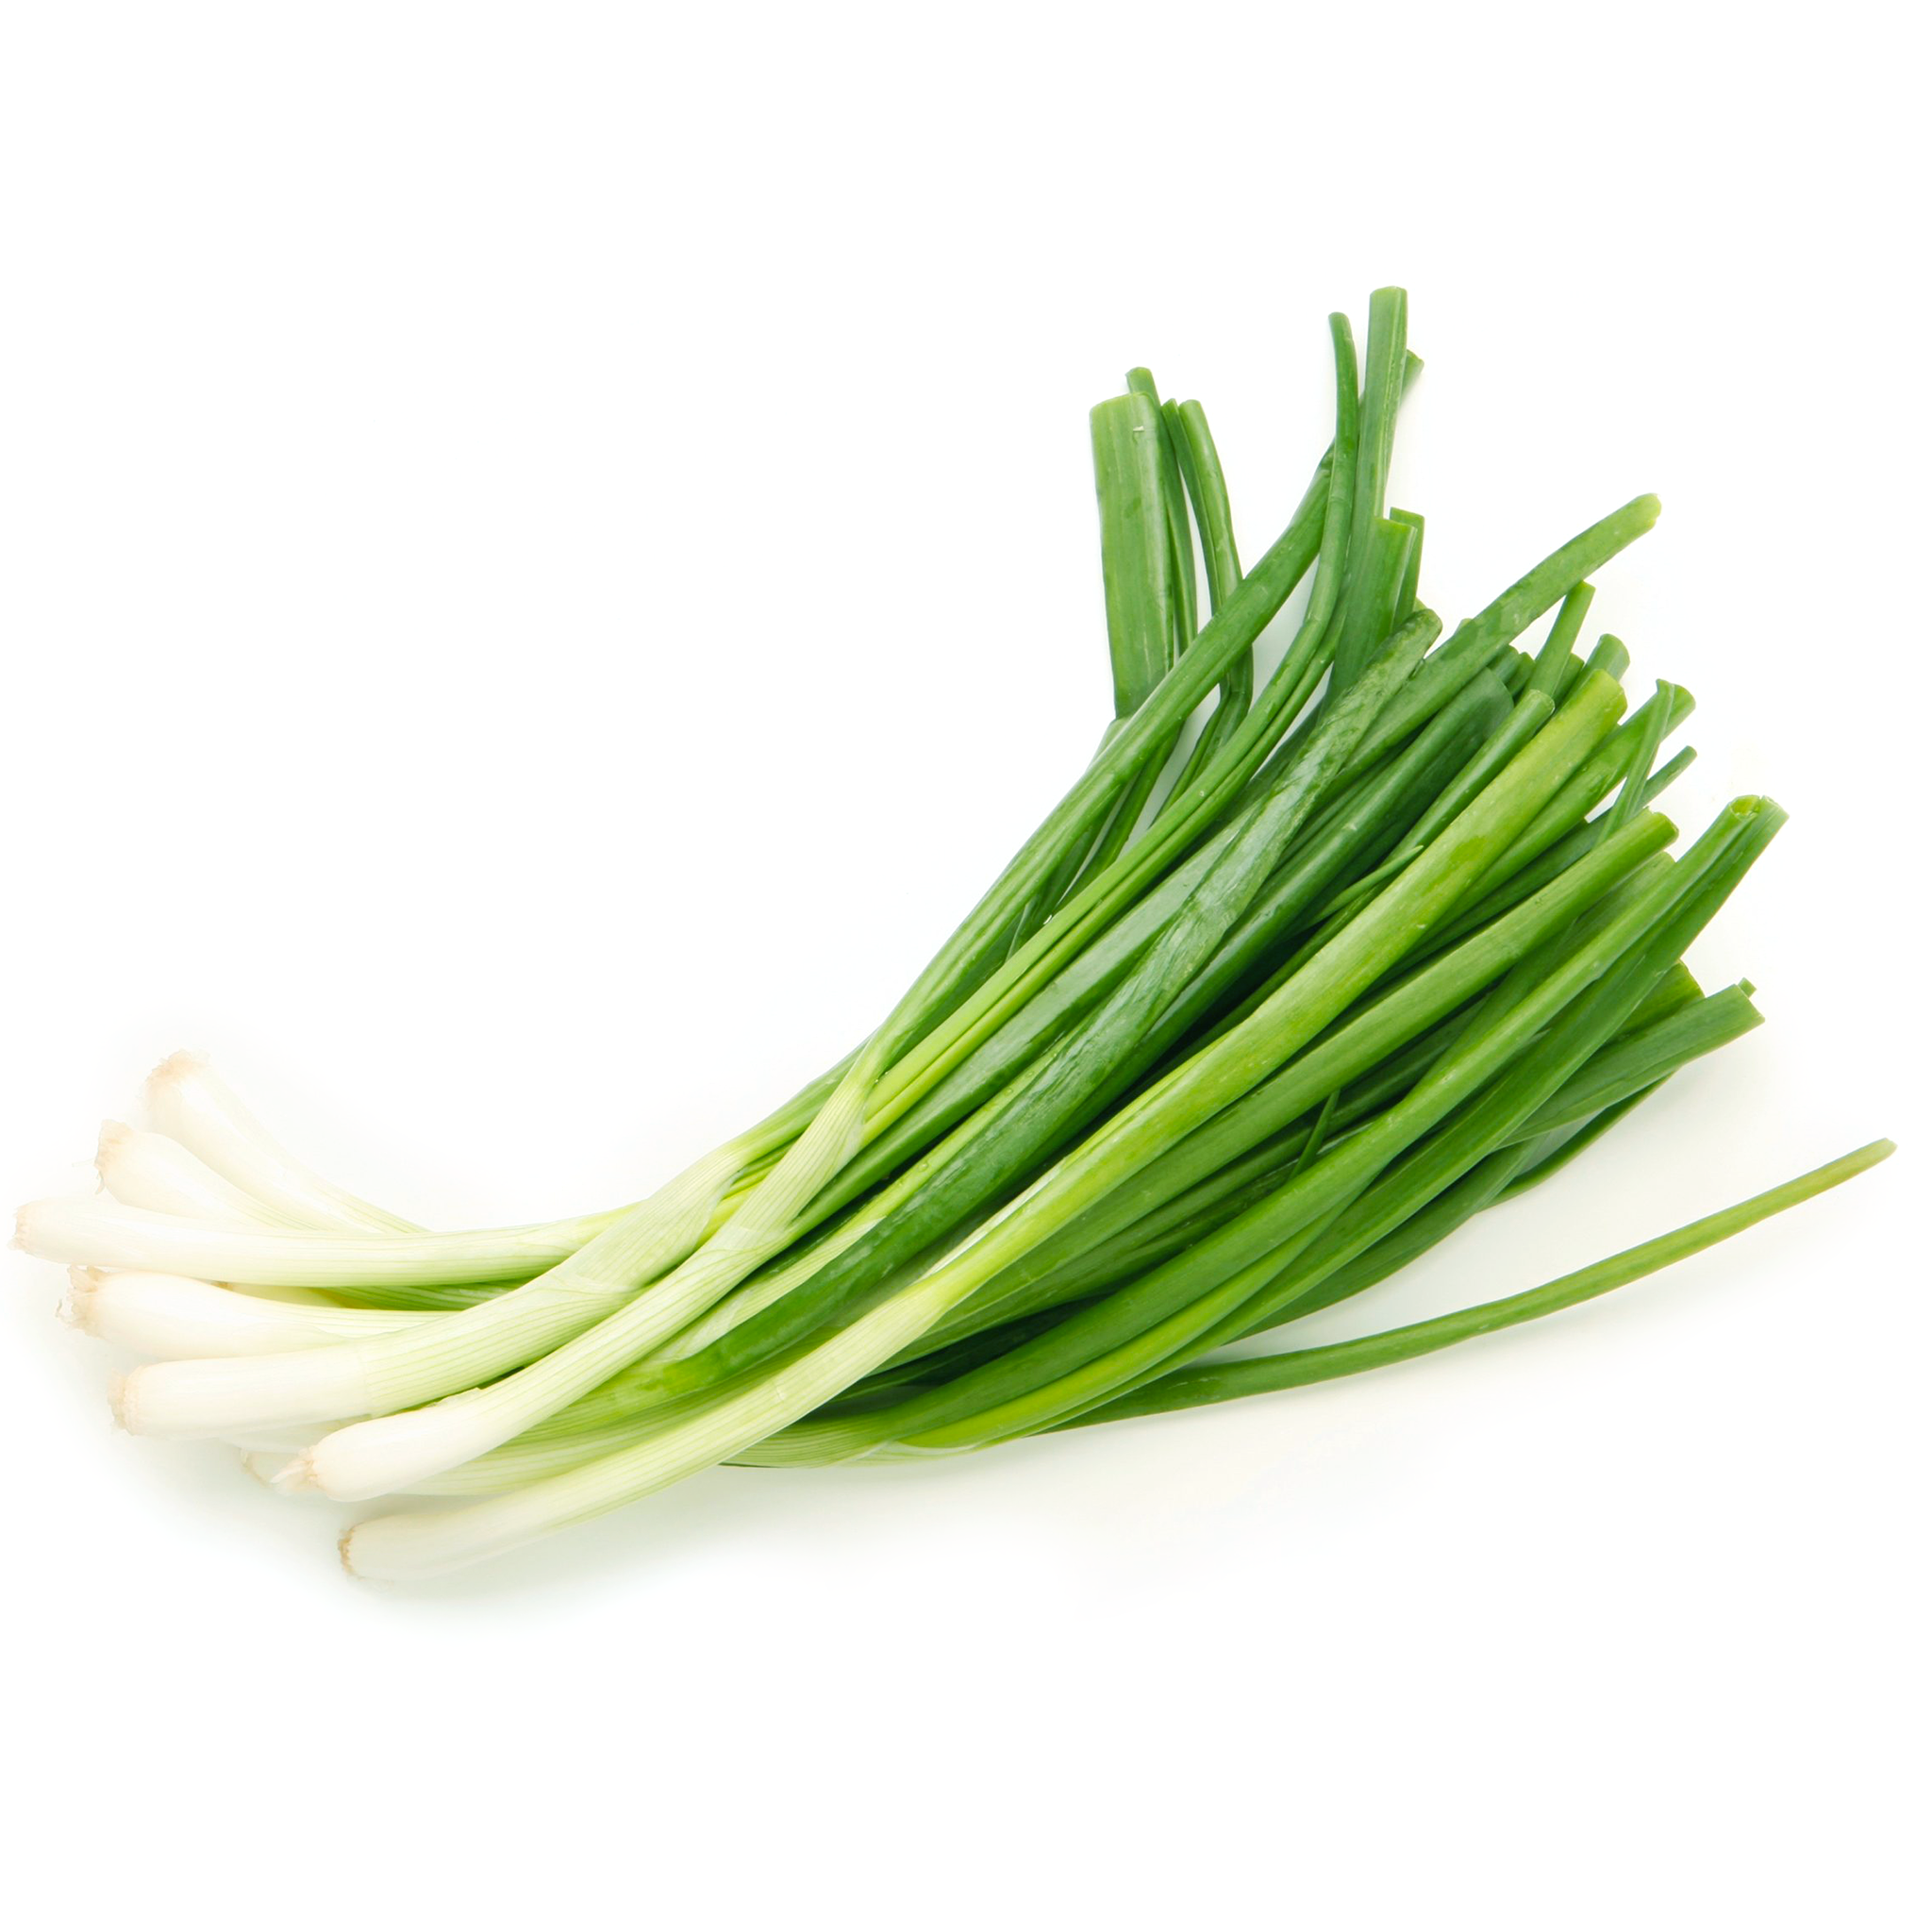 Scallion (Green Onion) - 2 Bunches (青葱) – Asian Veggies